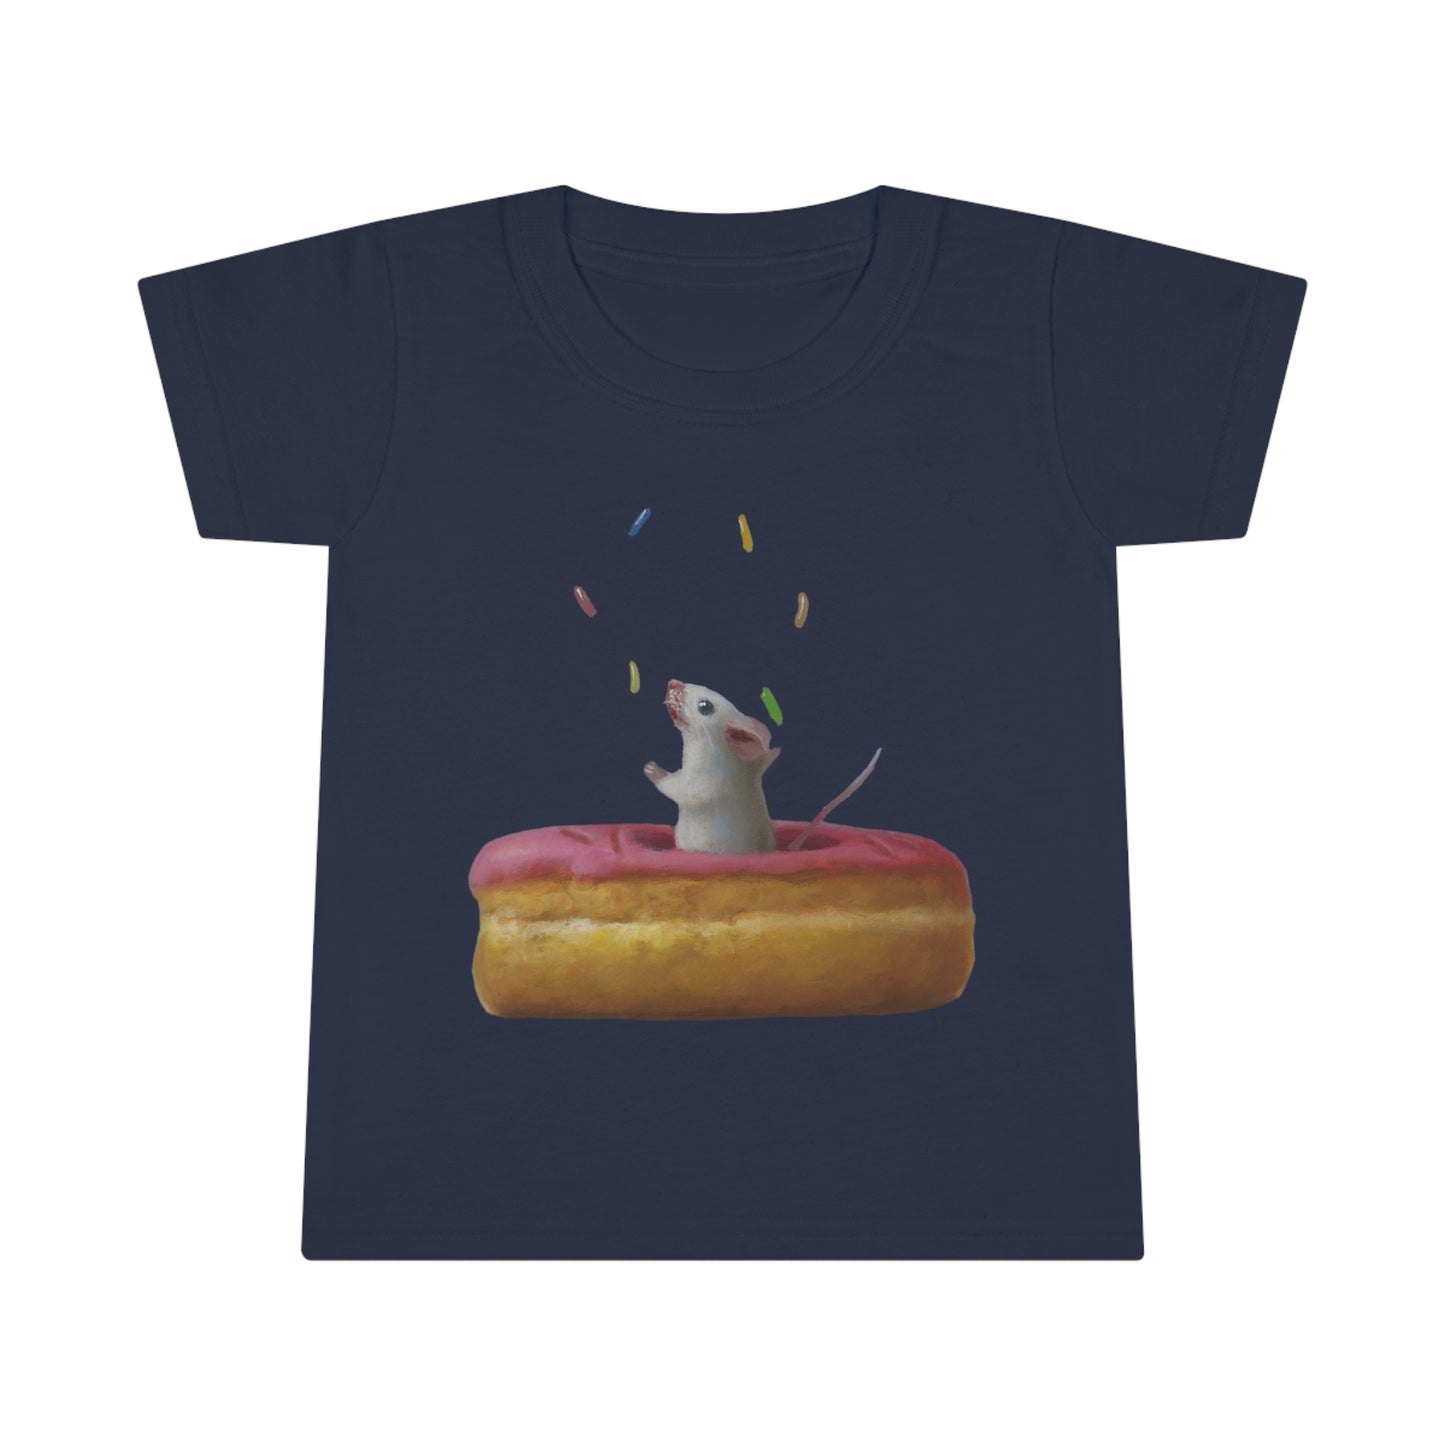 Stuart Dunkel: "Donut Fun" - Toddler T-shirt